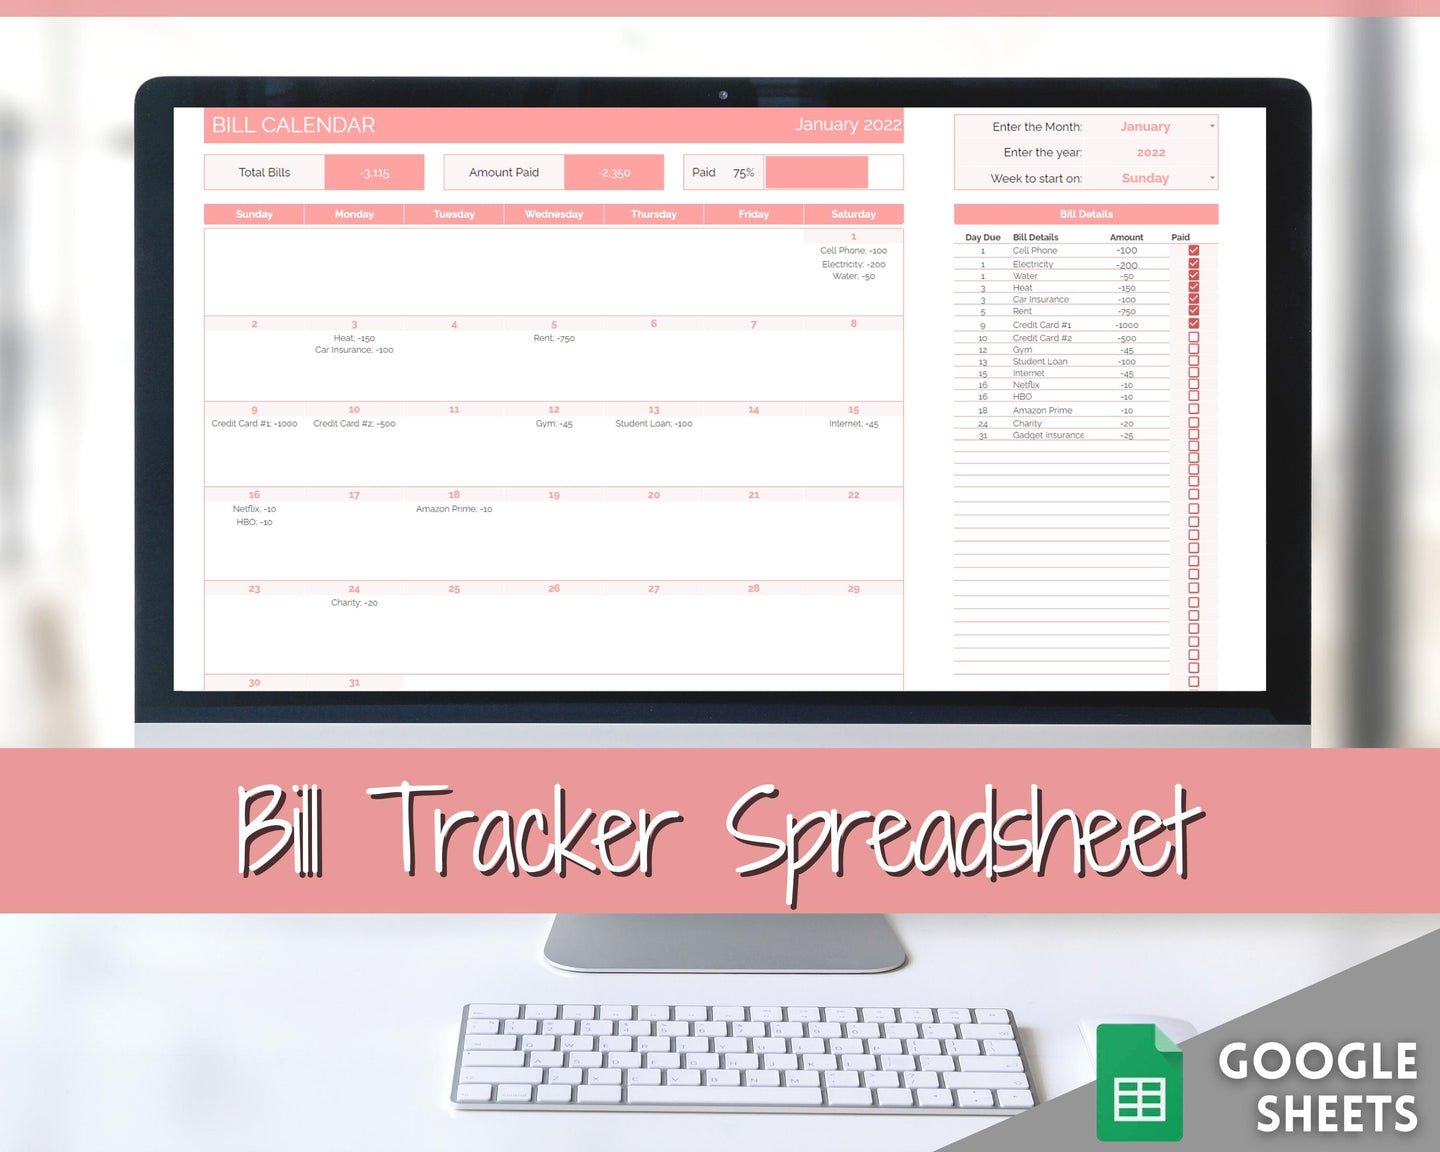 Monthly Bill Payment Tracker Spreadsheet | Google Sheets Automated Bill Calendar & Organizer | Pink